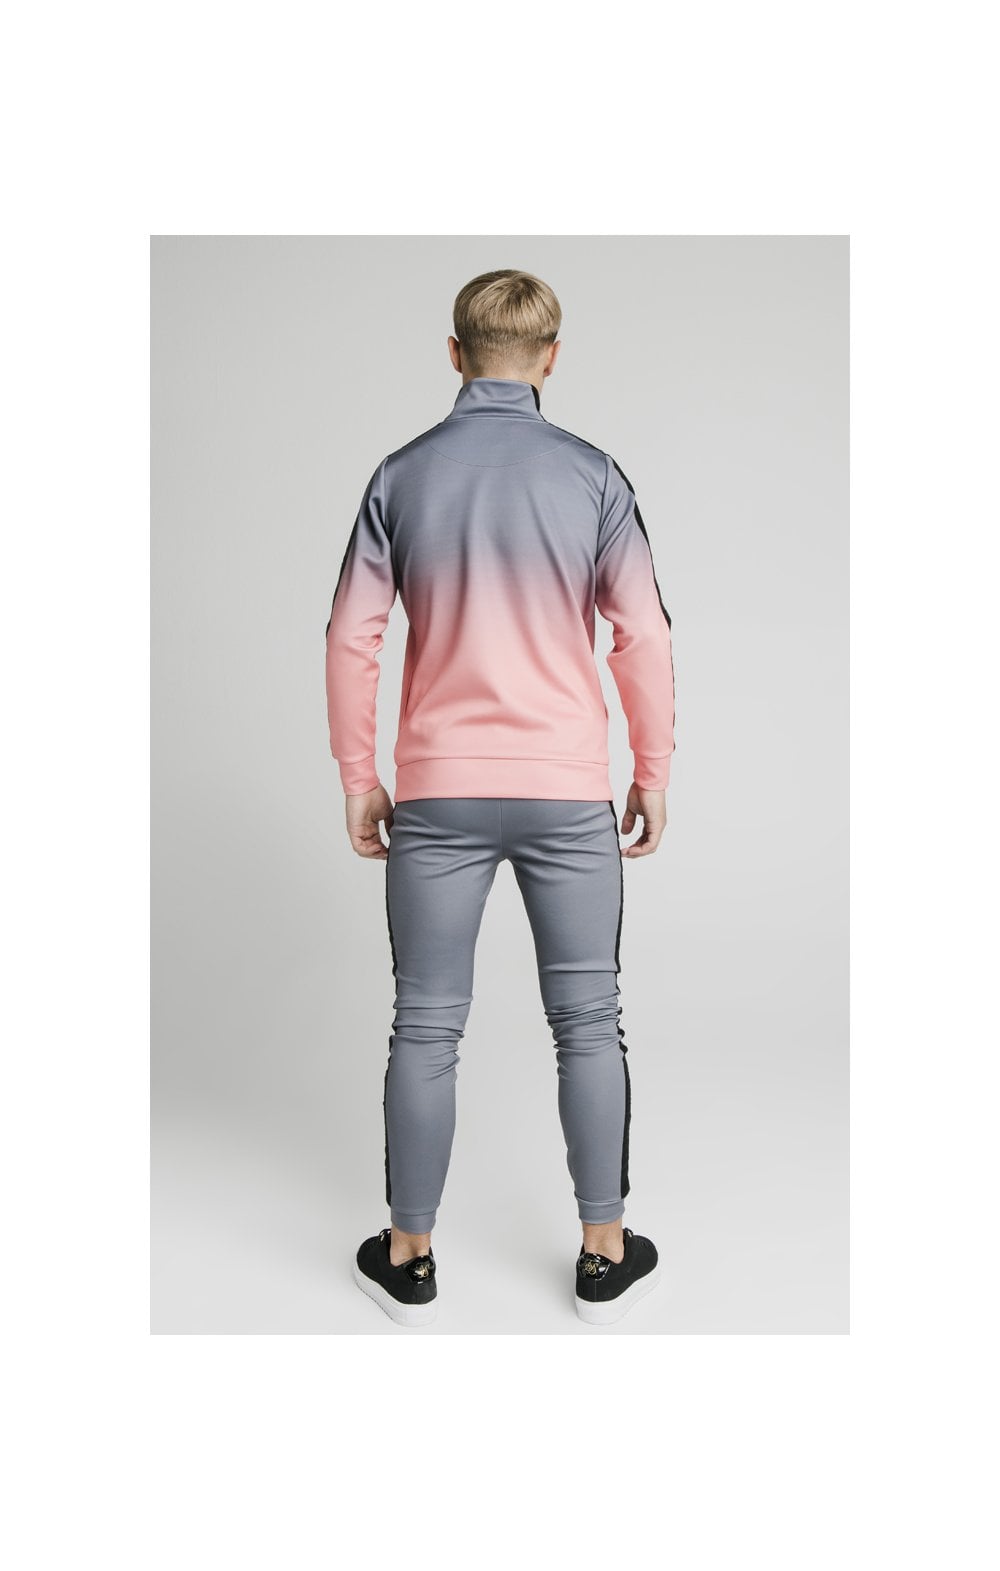 Illusive London Athlete Pants - Grey (6)